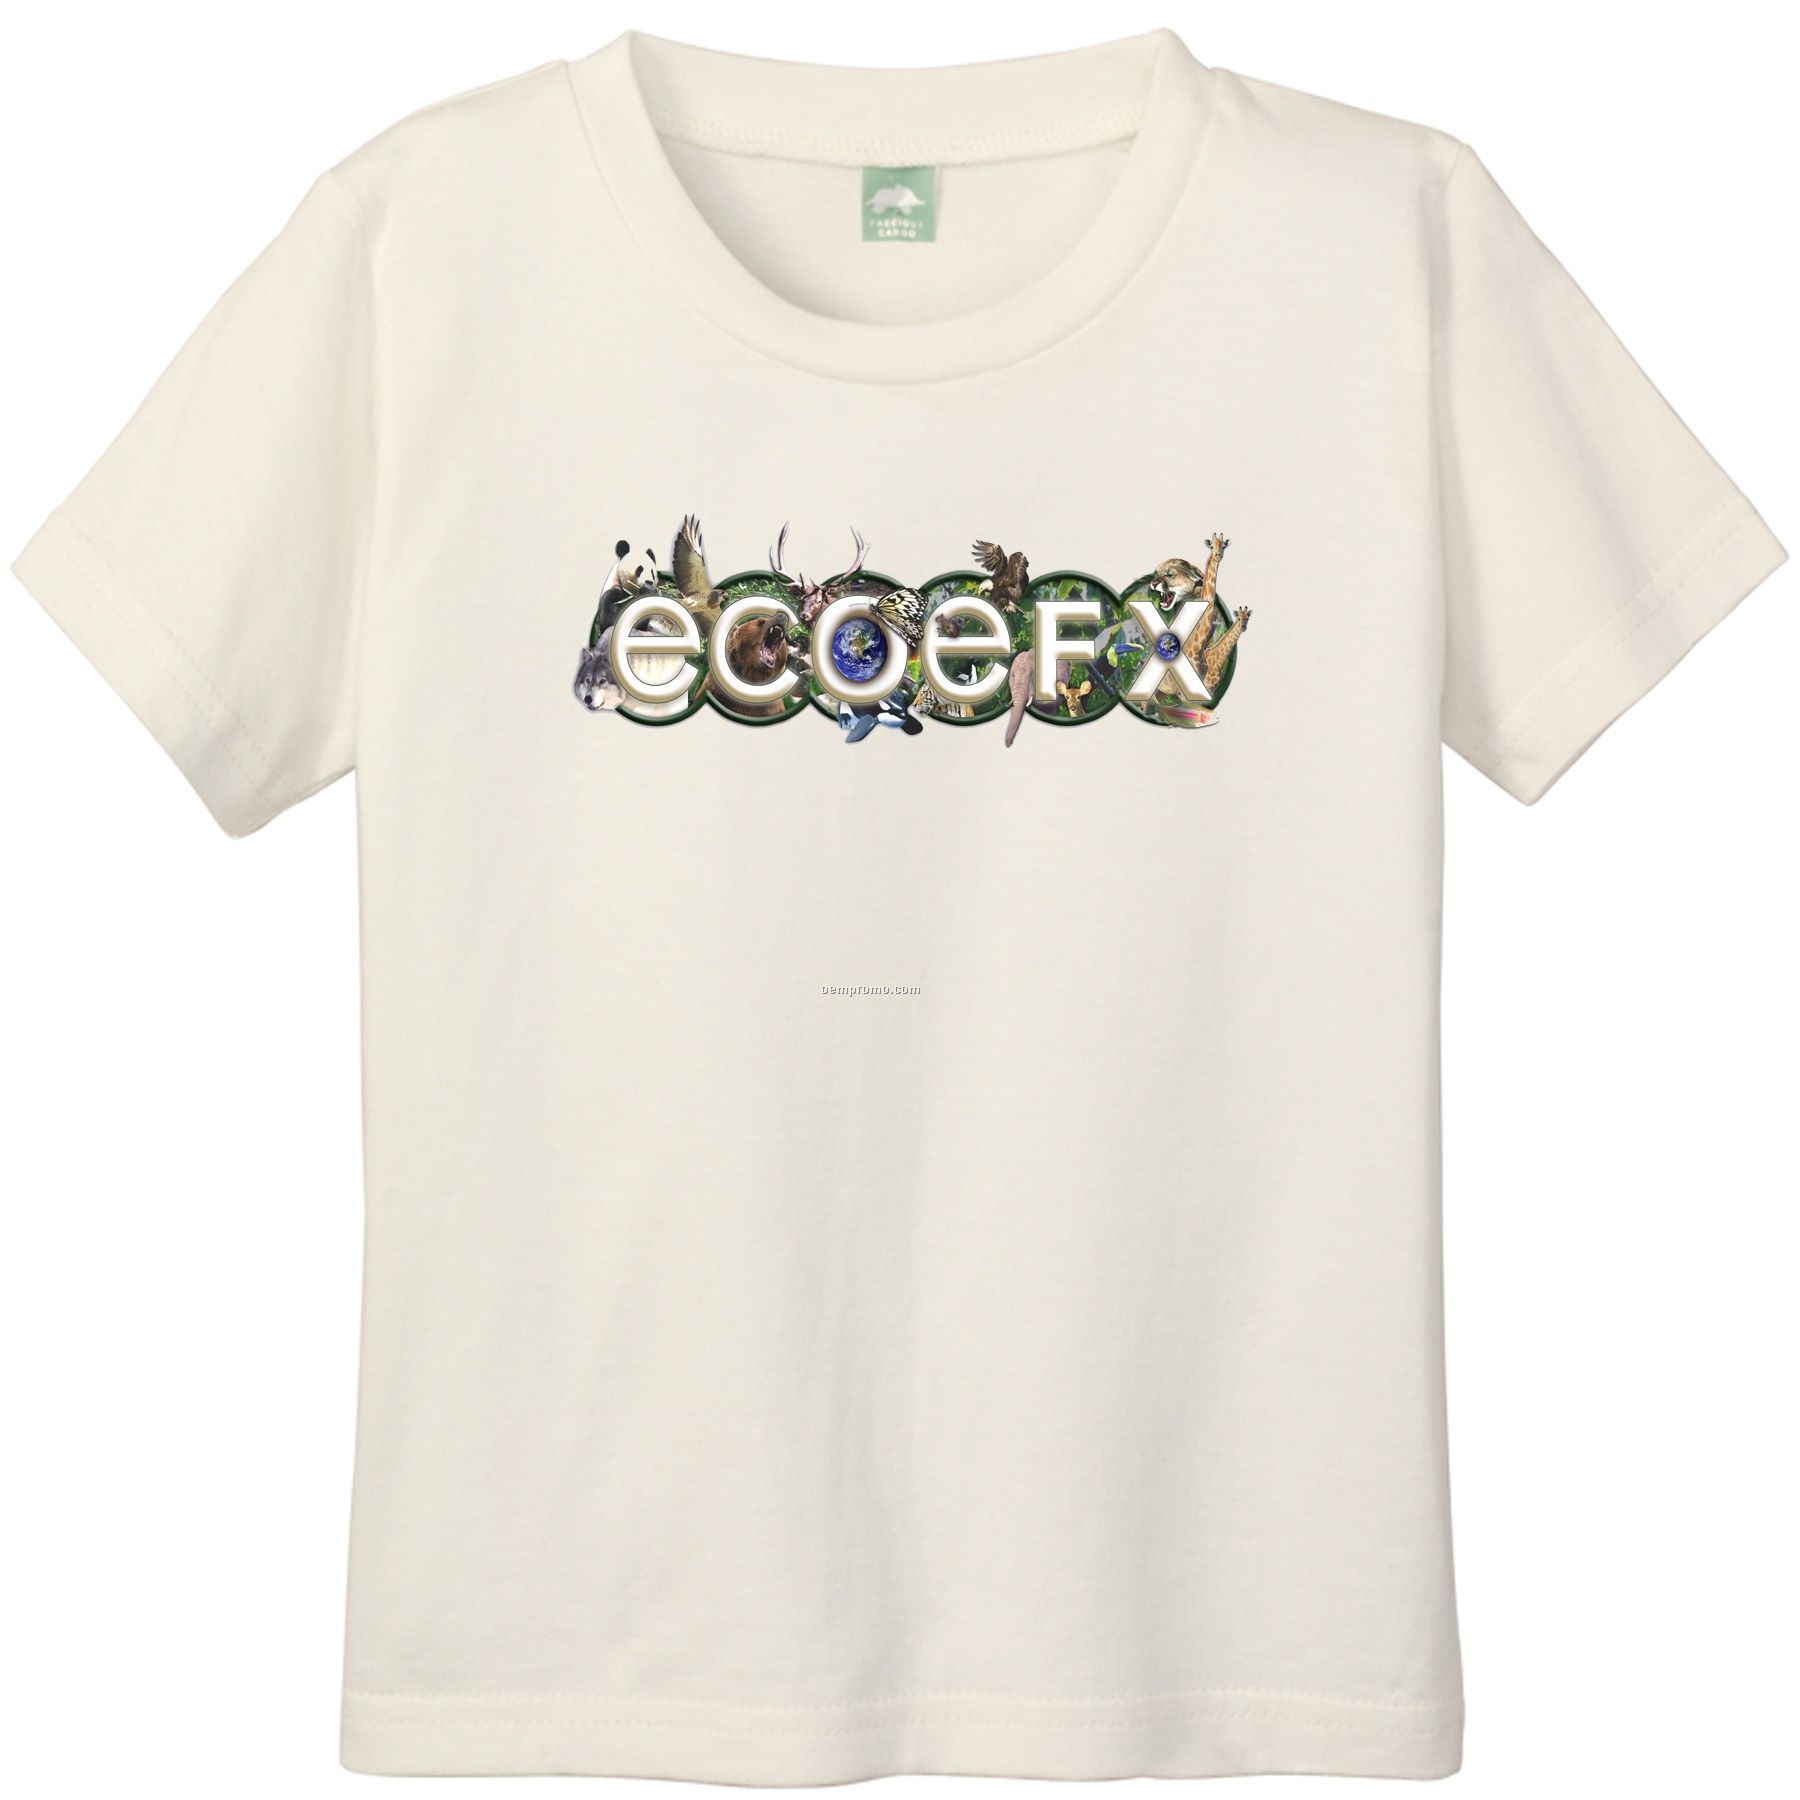 Toddler 100% Organic Cotton T-shirt (2t-4t) Colors